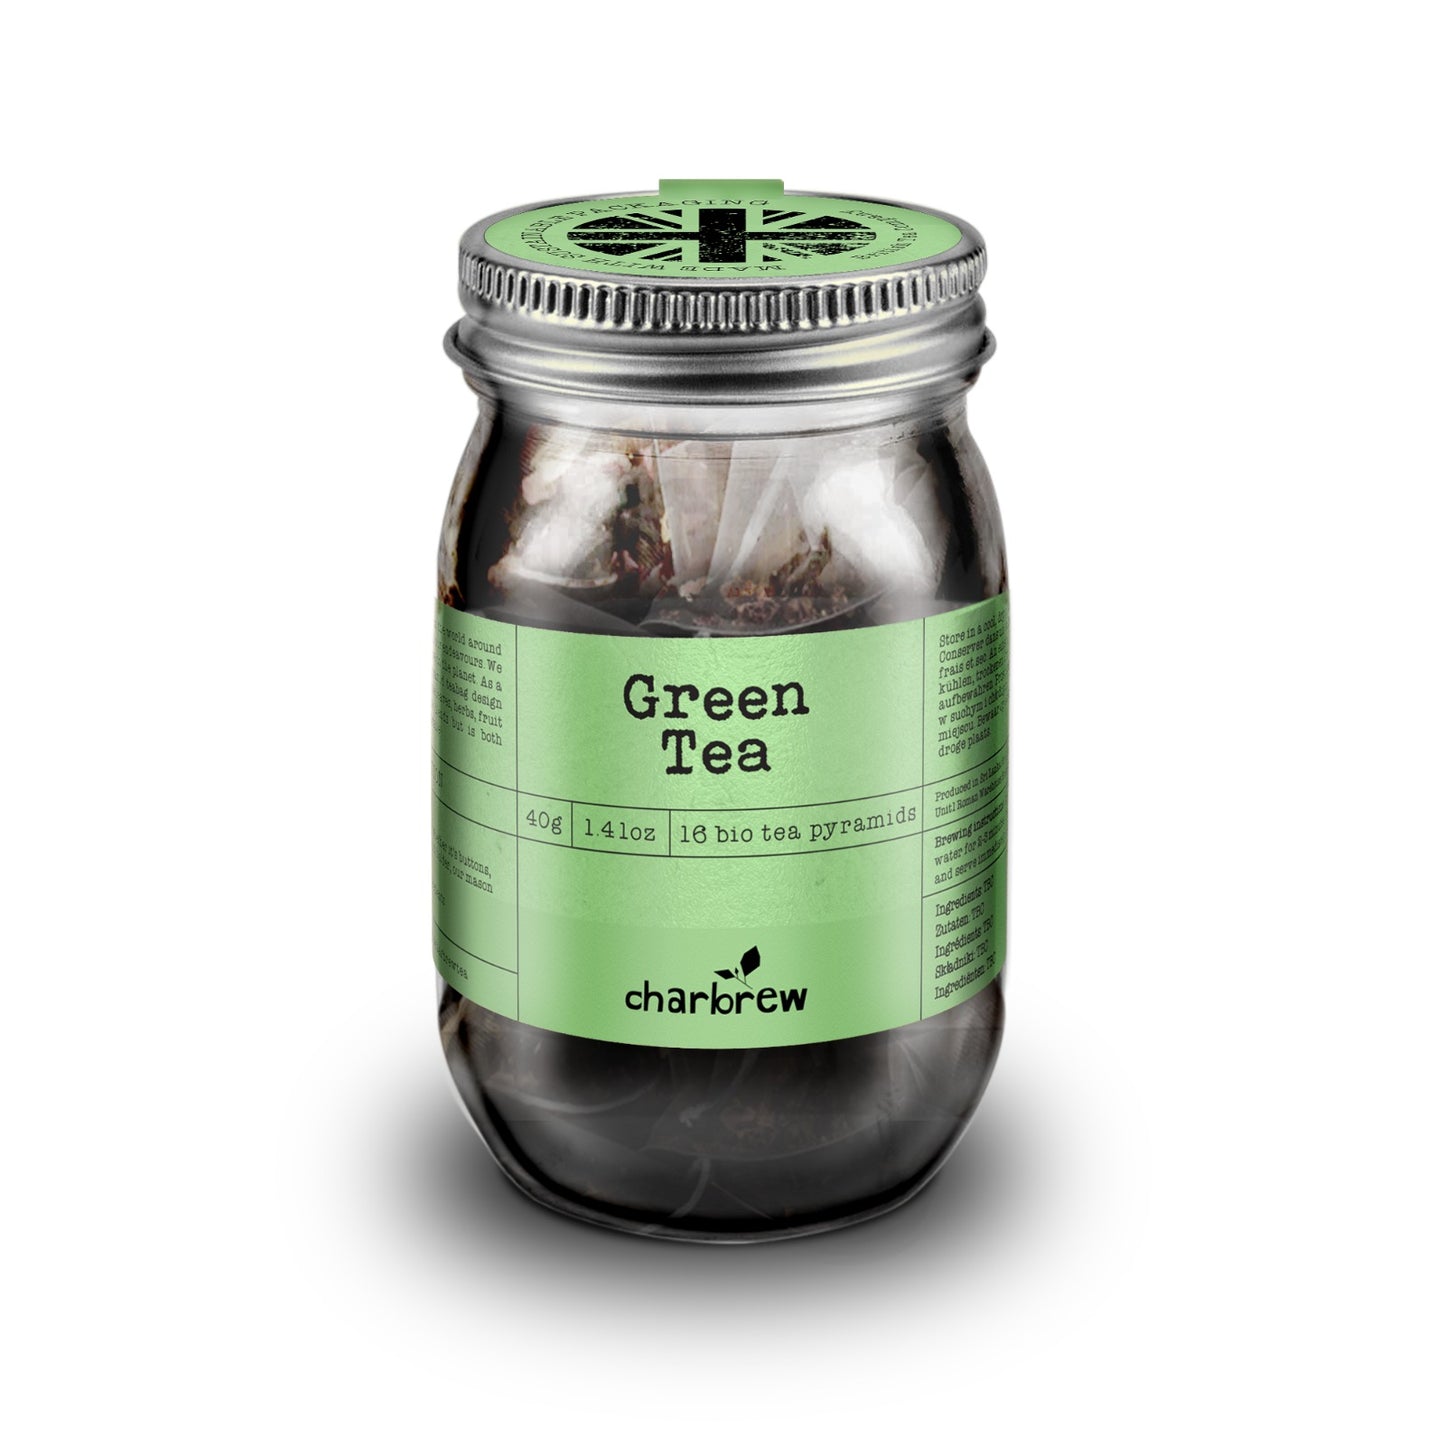 Green Tea Bags Mason Jar - 16 Biodegradable Pyramid Bags